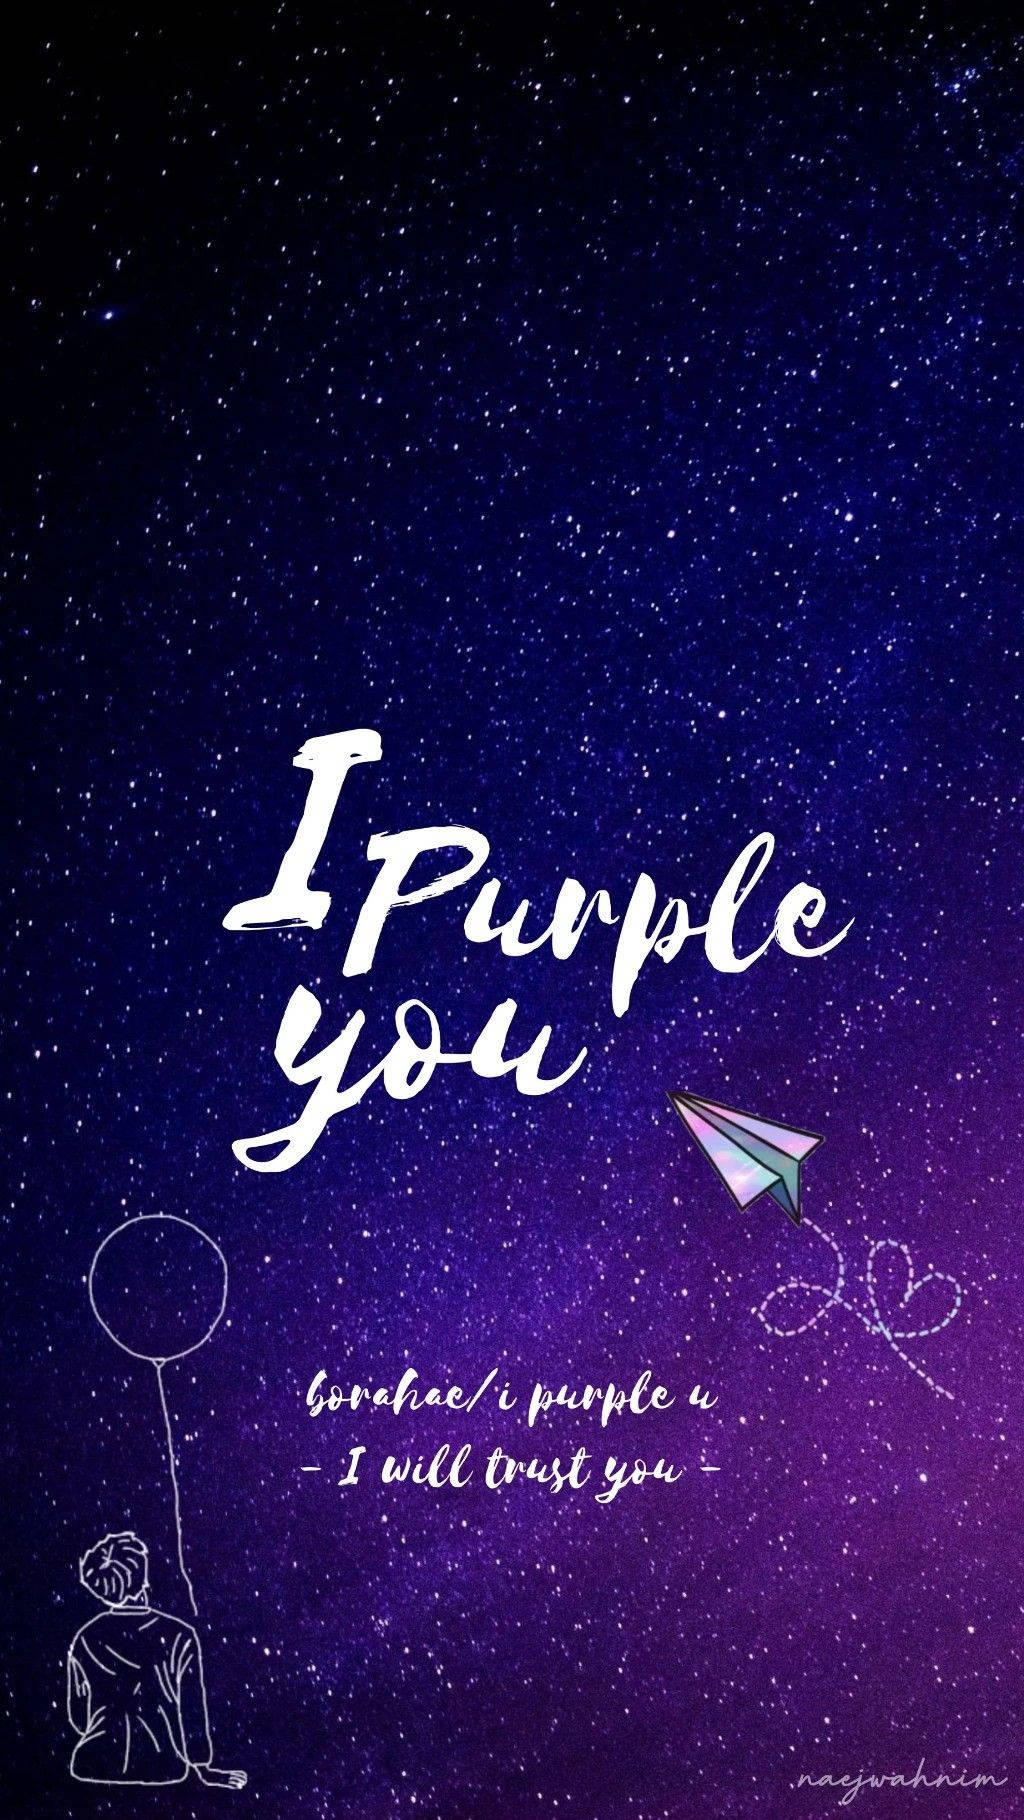 Borahae Pastel Purple Galaxy Theme Wallpaper